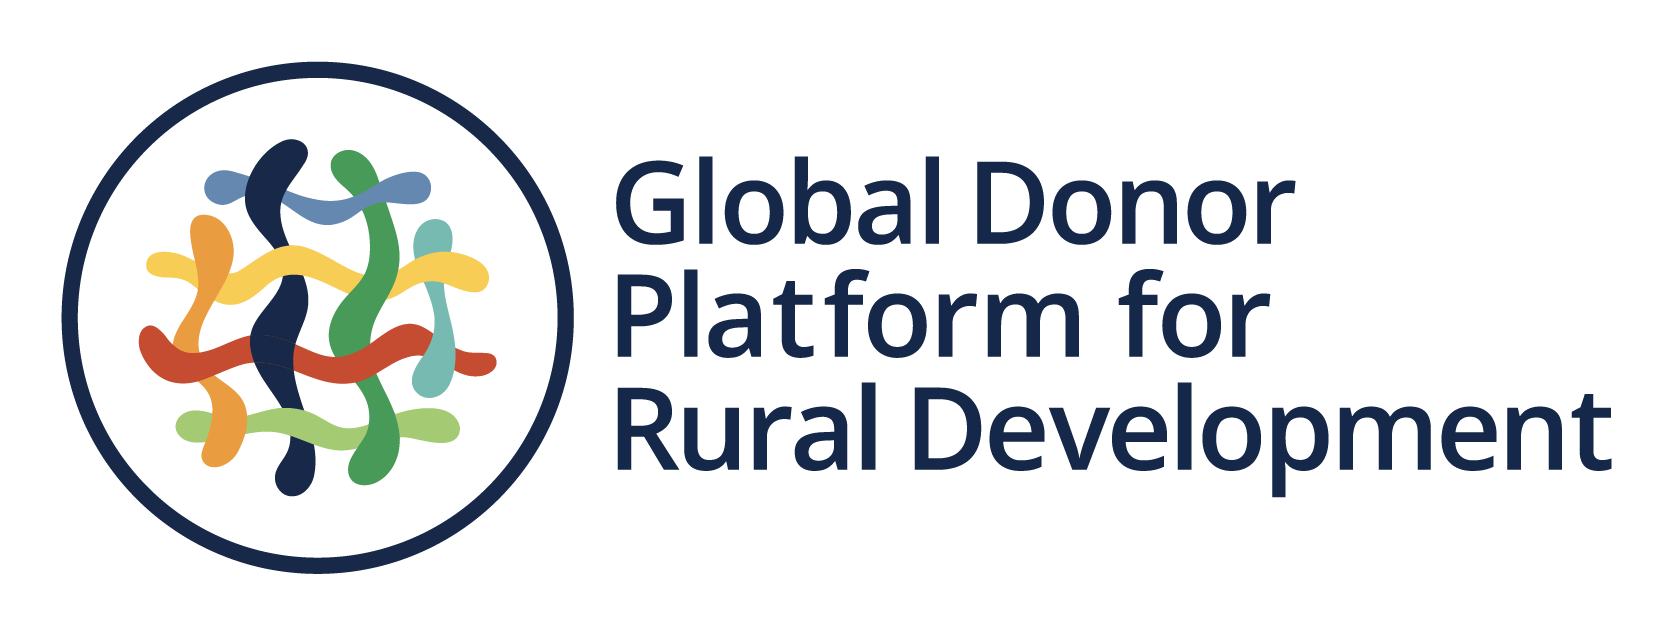 Global Donor Platform for Rural Development Logo